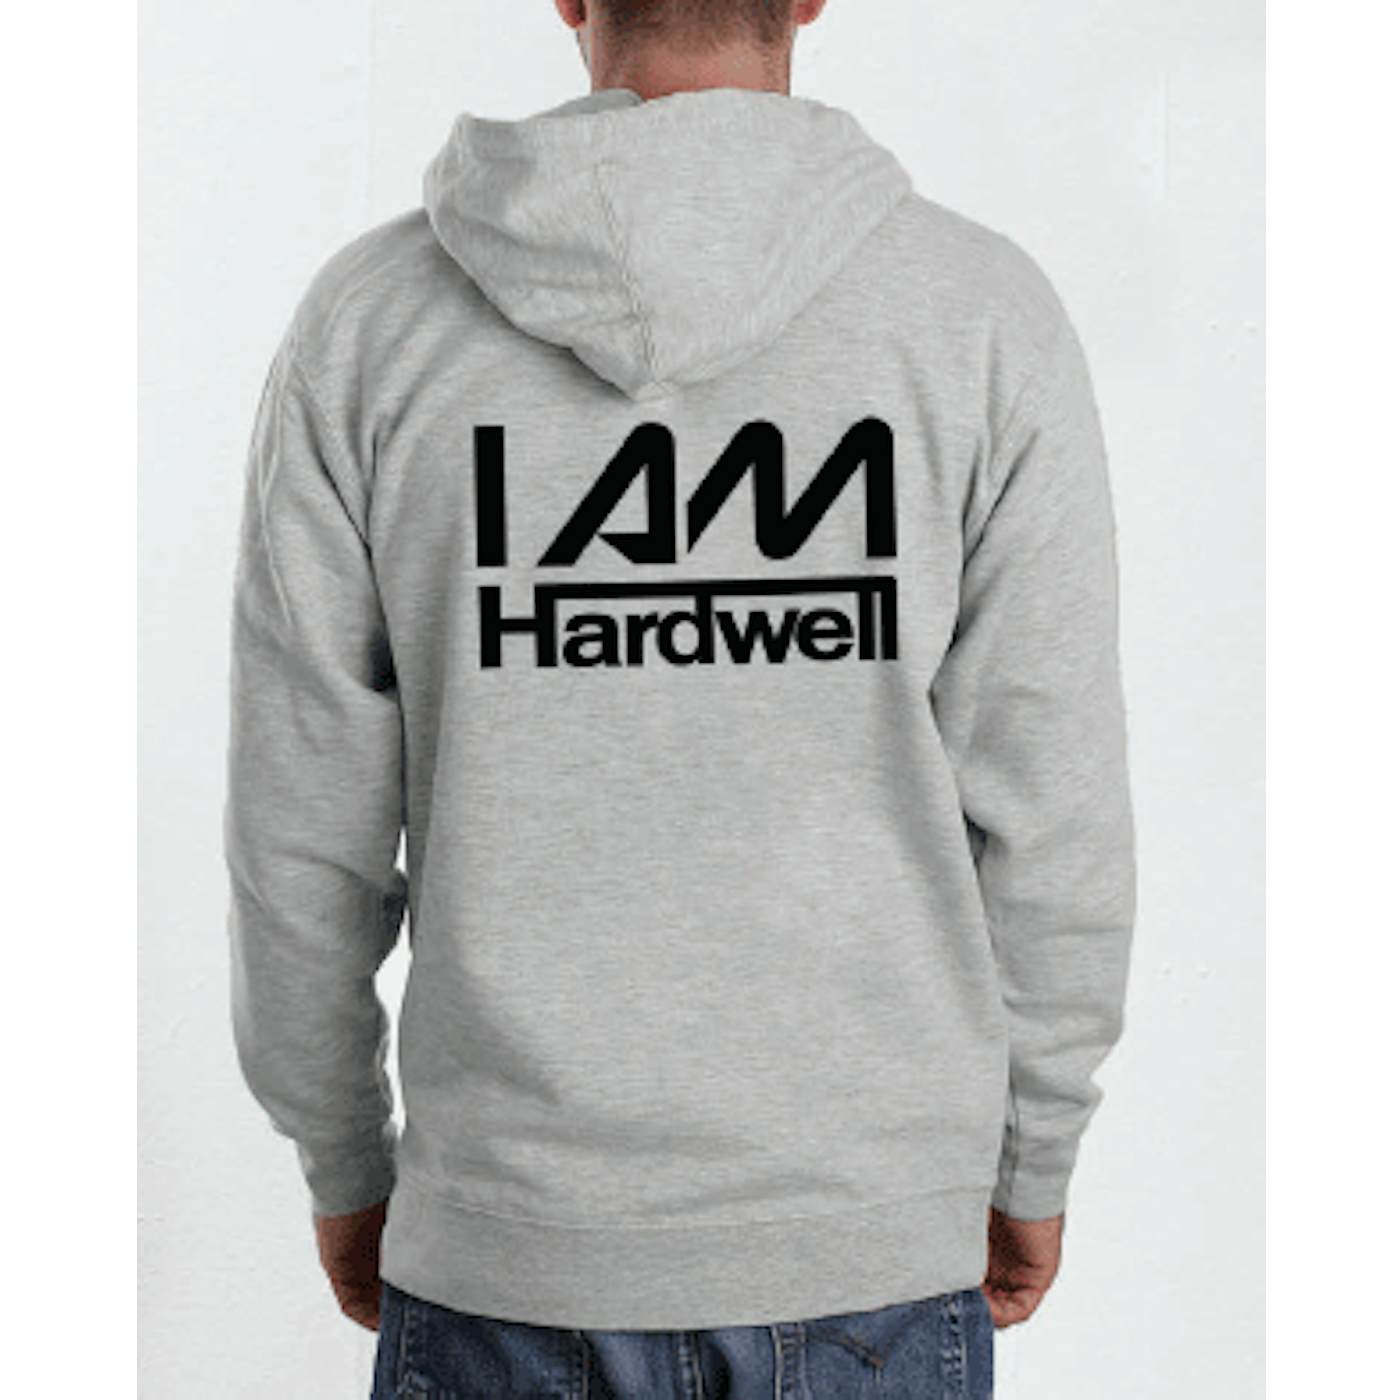 Hardwell Pocket Logo Grey Marle Hoody